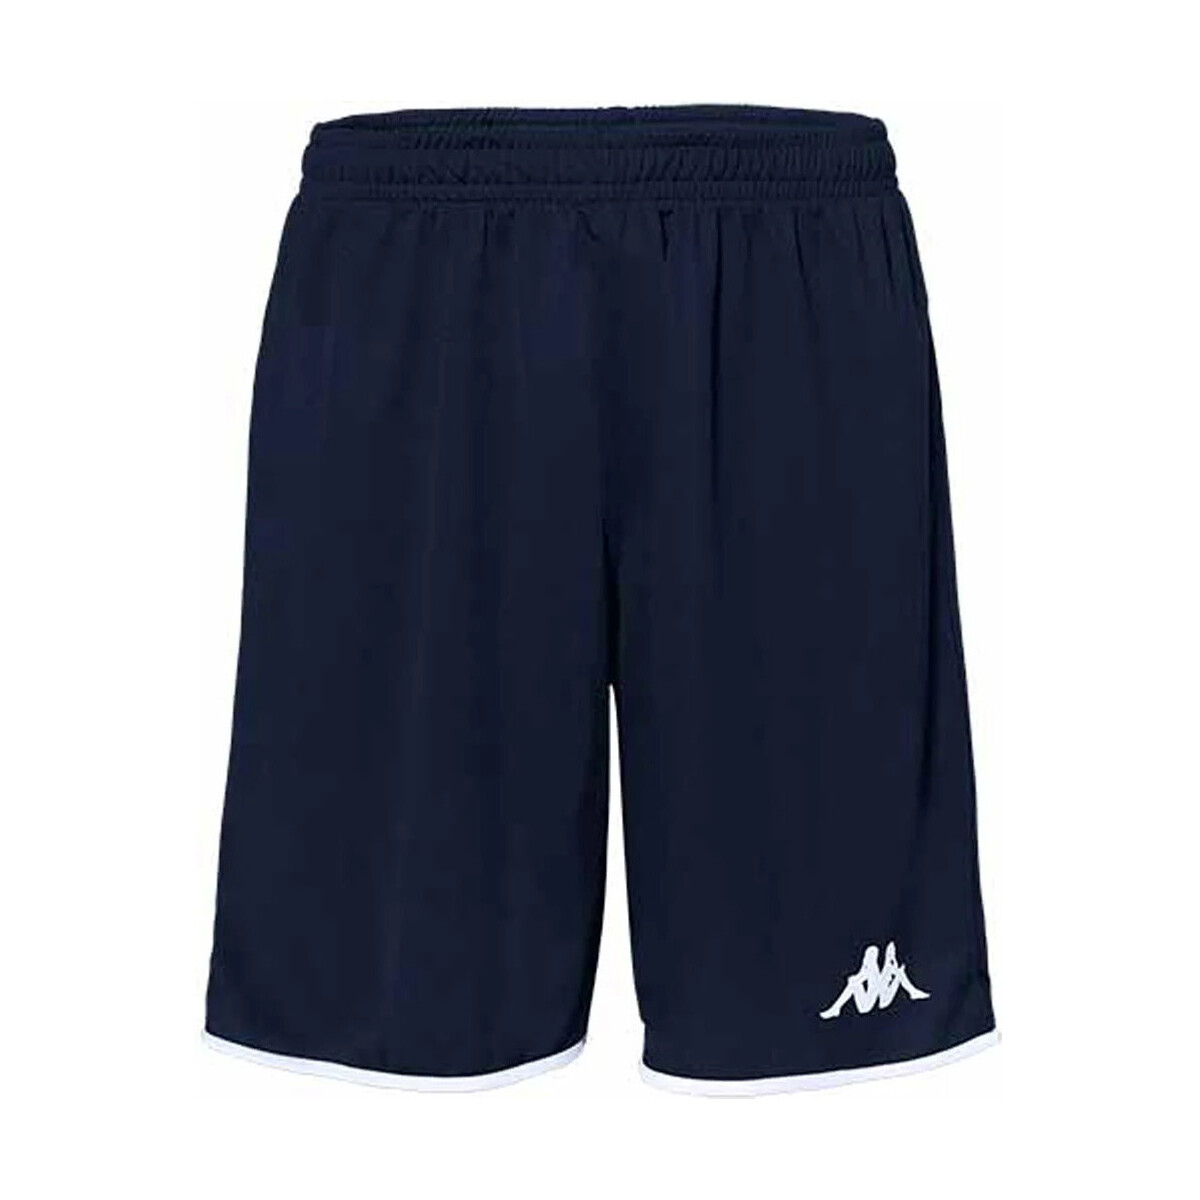 textil Shorts / Bermudas Kappa DUMPO Azul